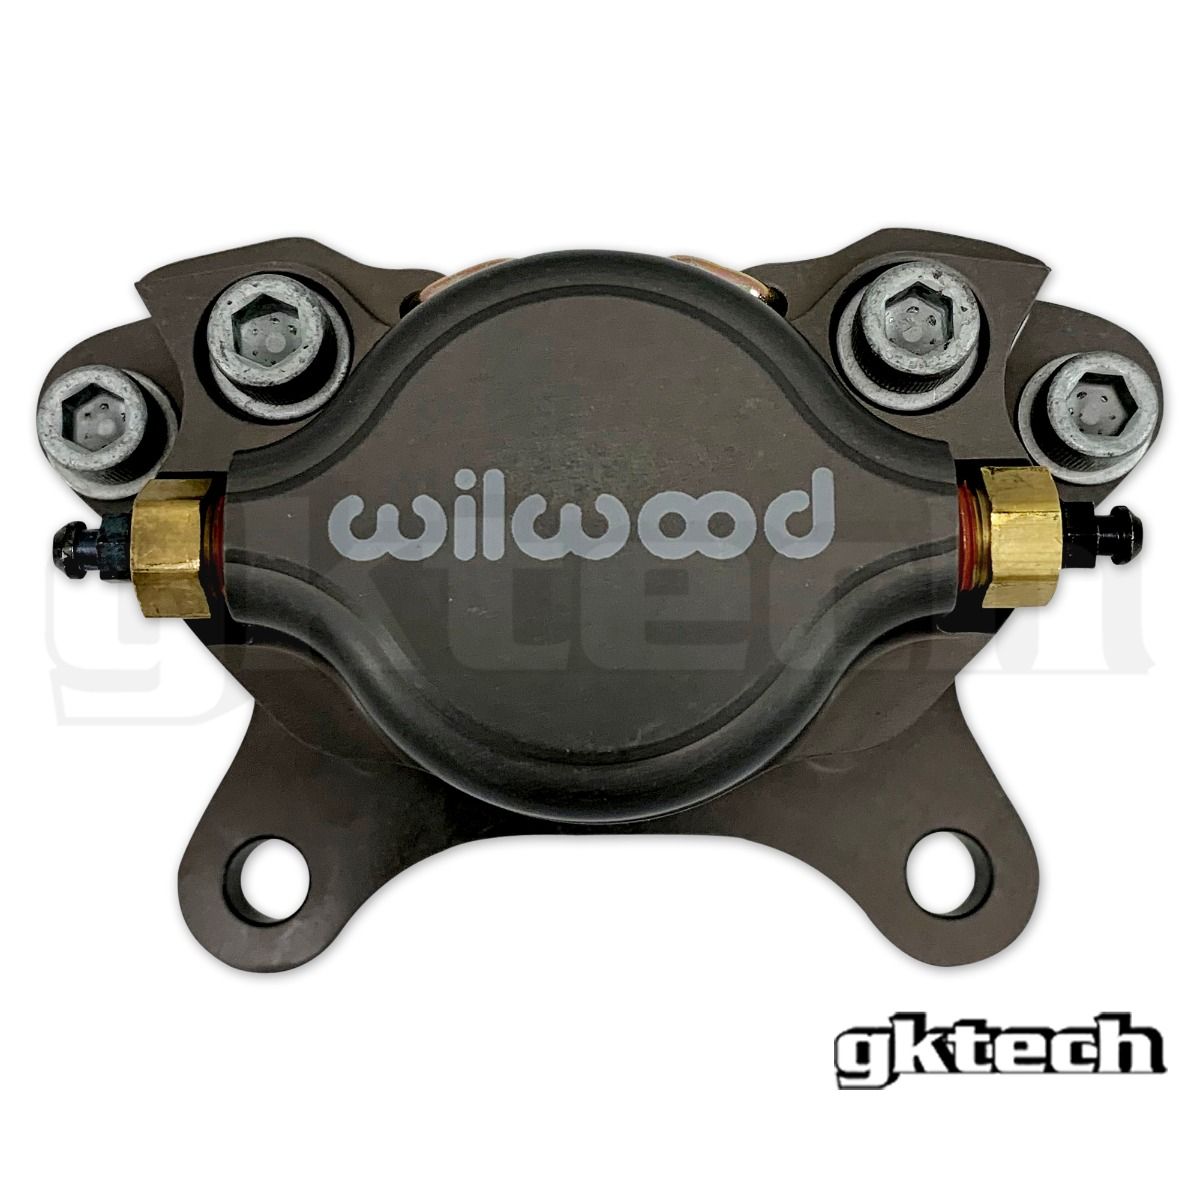 Wilwood S-chassis dual caliper Hidden Hydraulic handbrake setup - (10% combo discount)